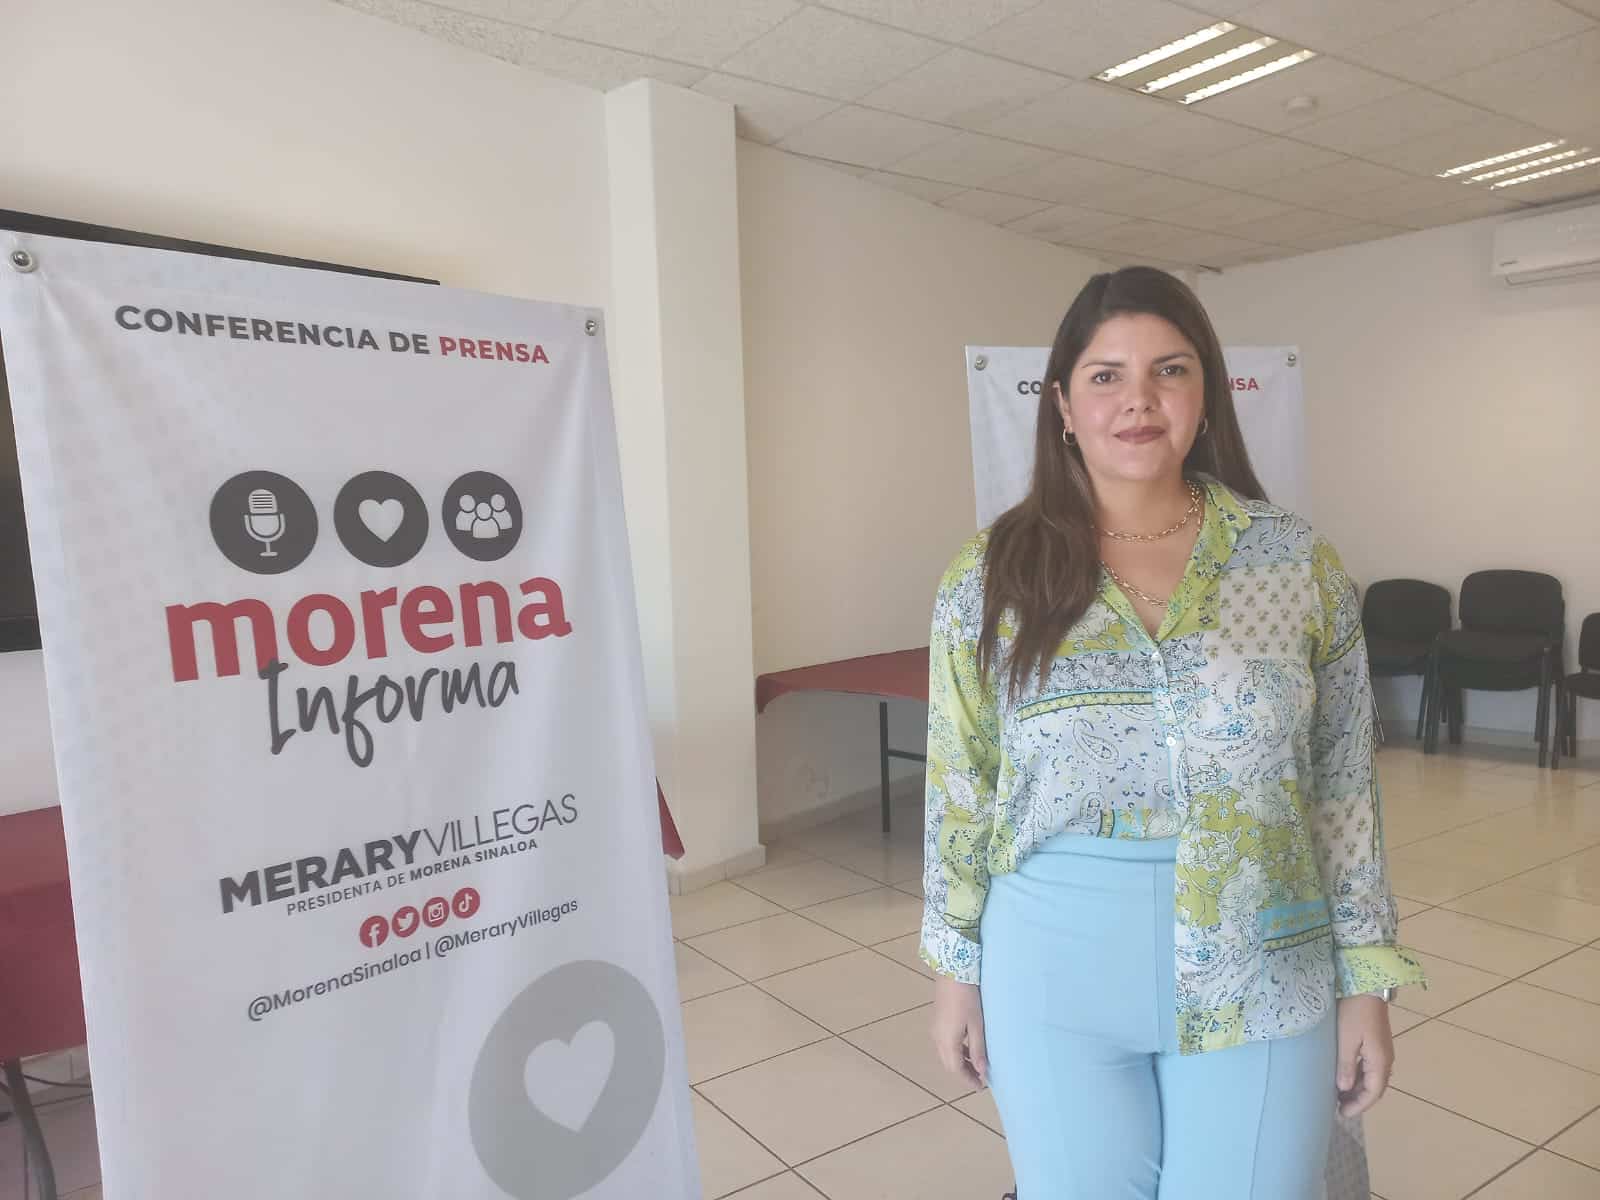 Merary Villegas Morena